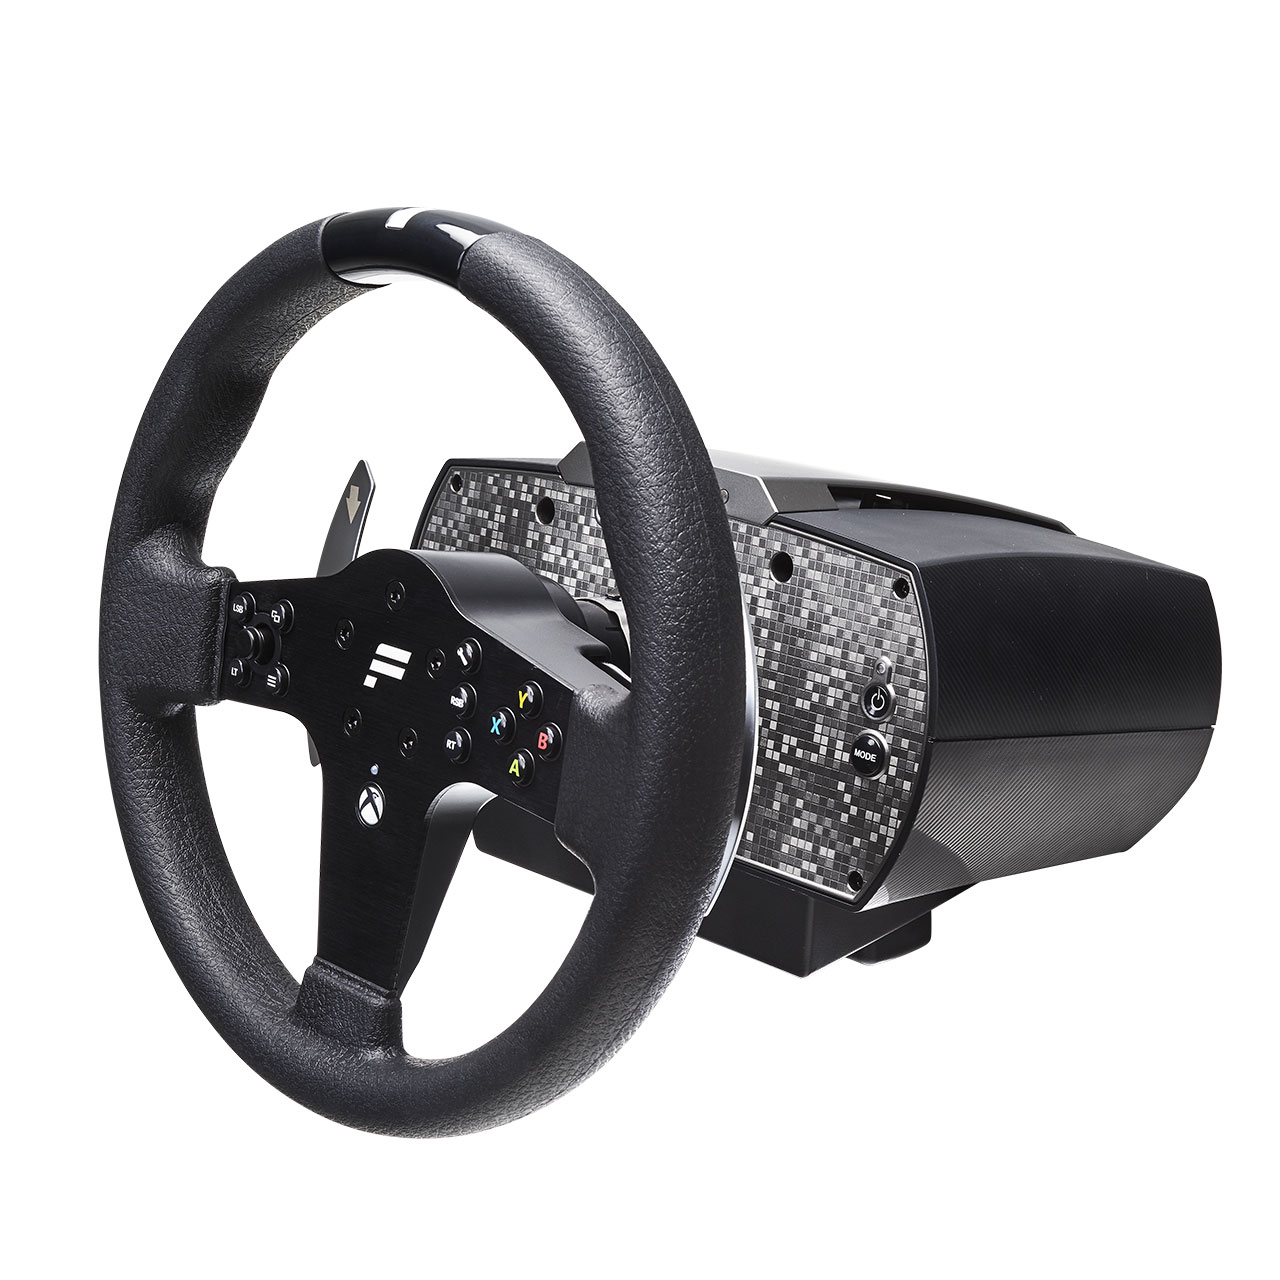 CSL Elite Racing Wheel P1 for Xbox One and PC | Racing Wheels | Racing